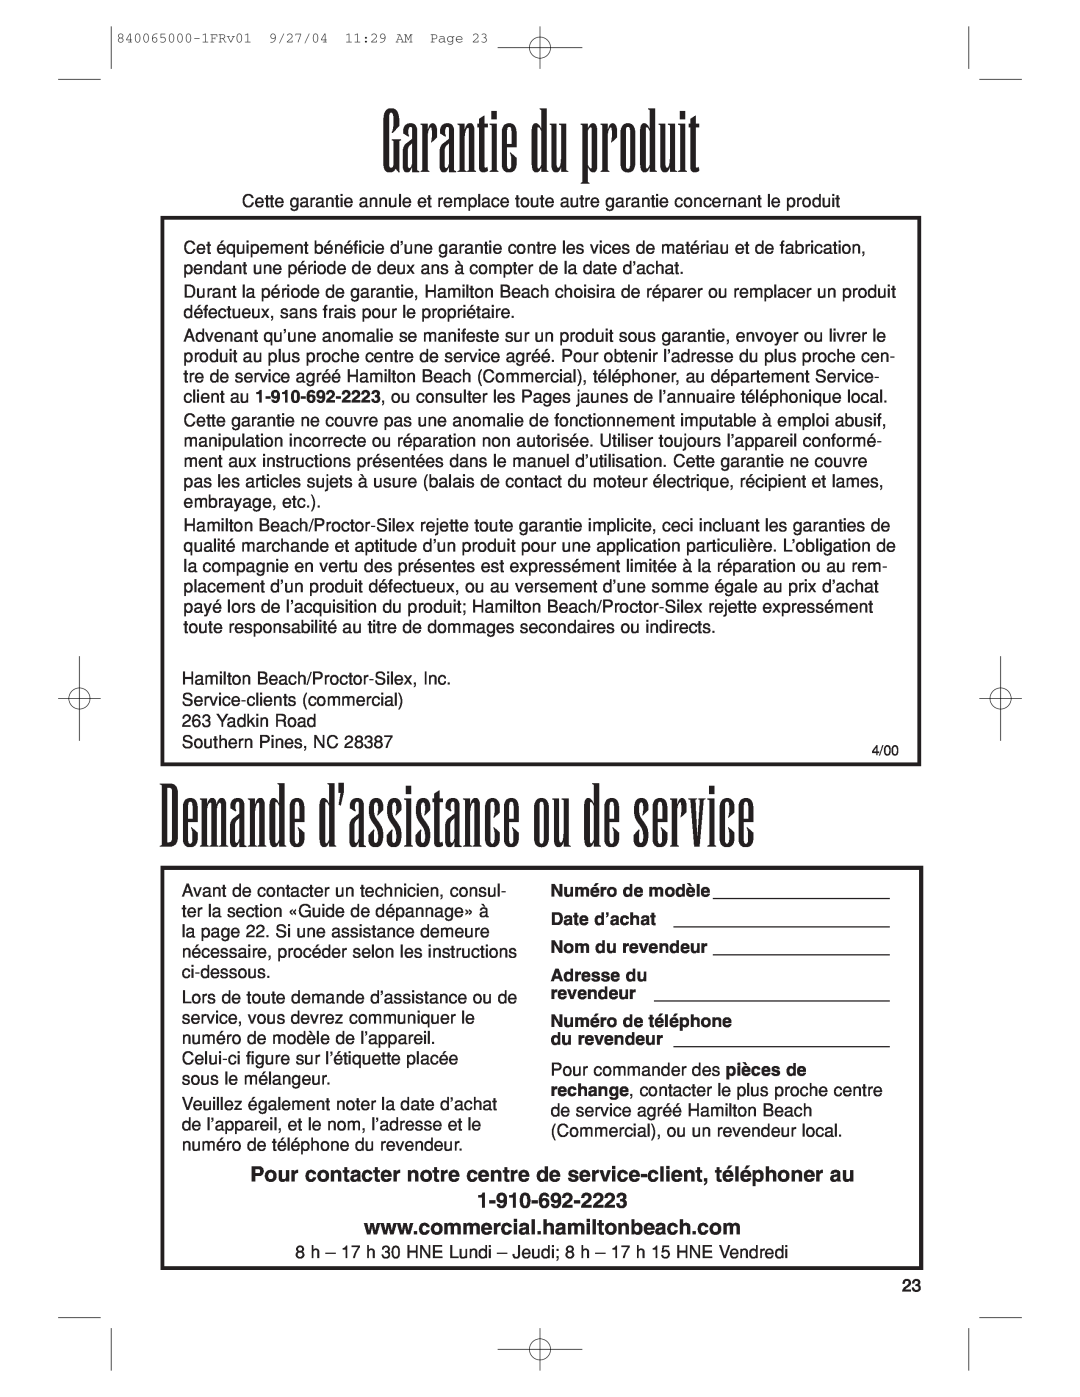 Proctor-Silex 994 operation manual Garantie du produit, Demande d’assistance ou de service 